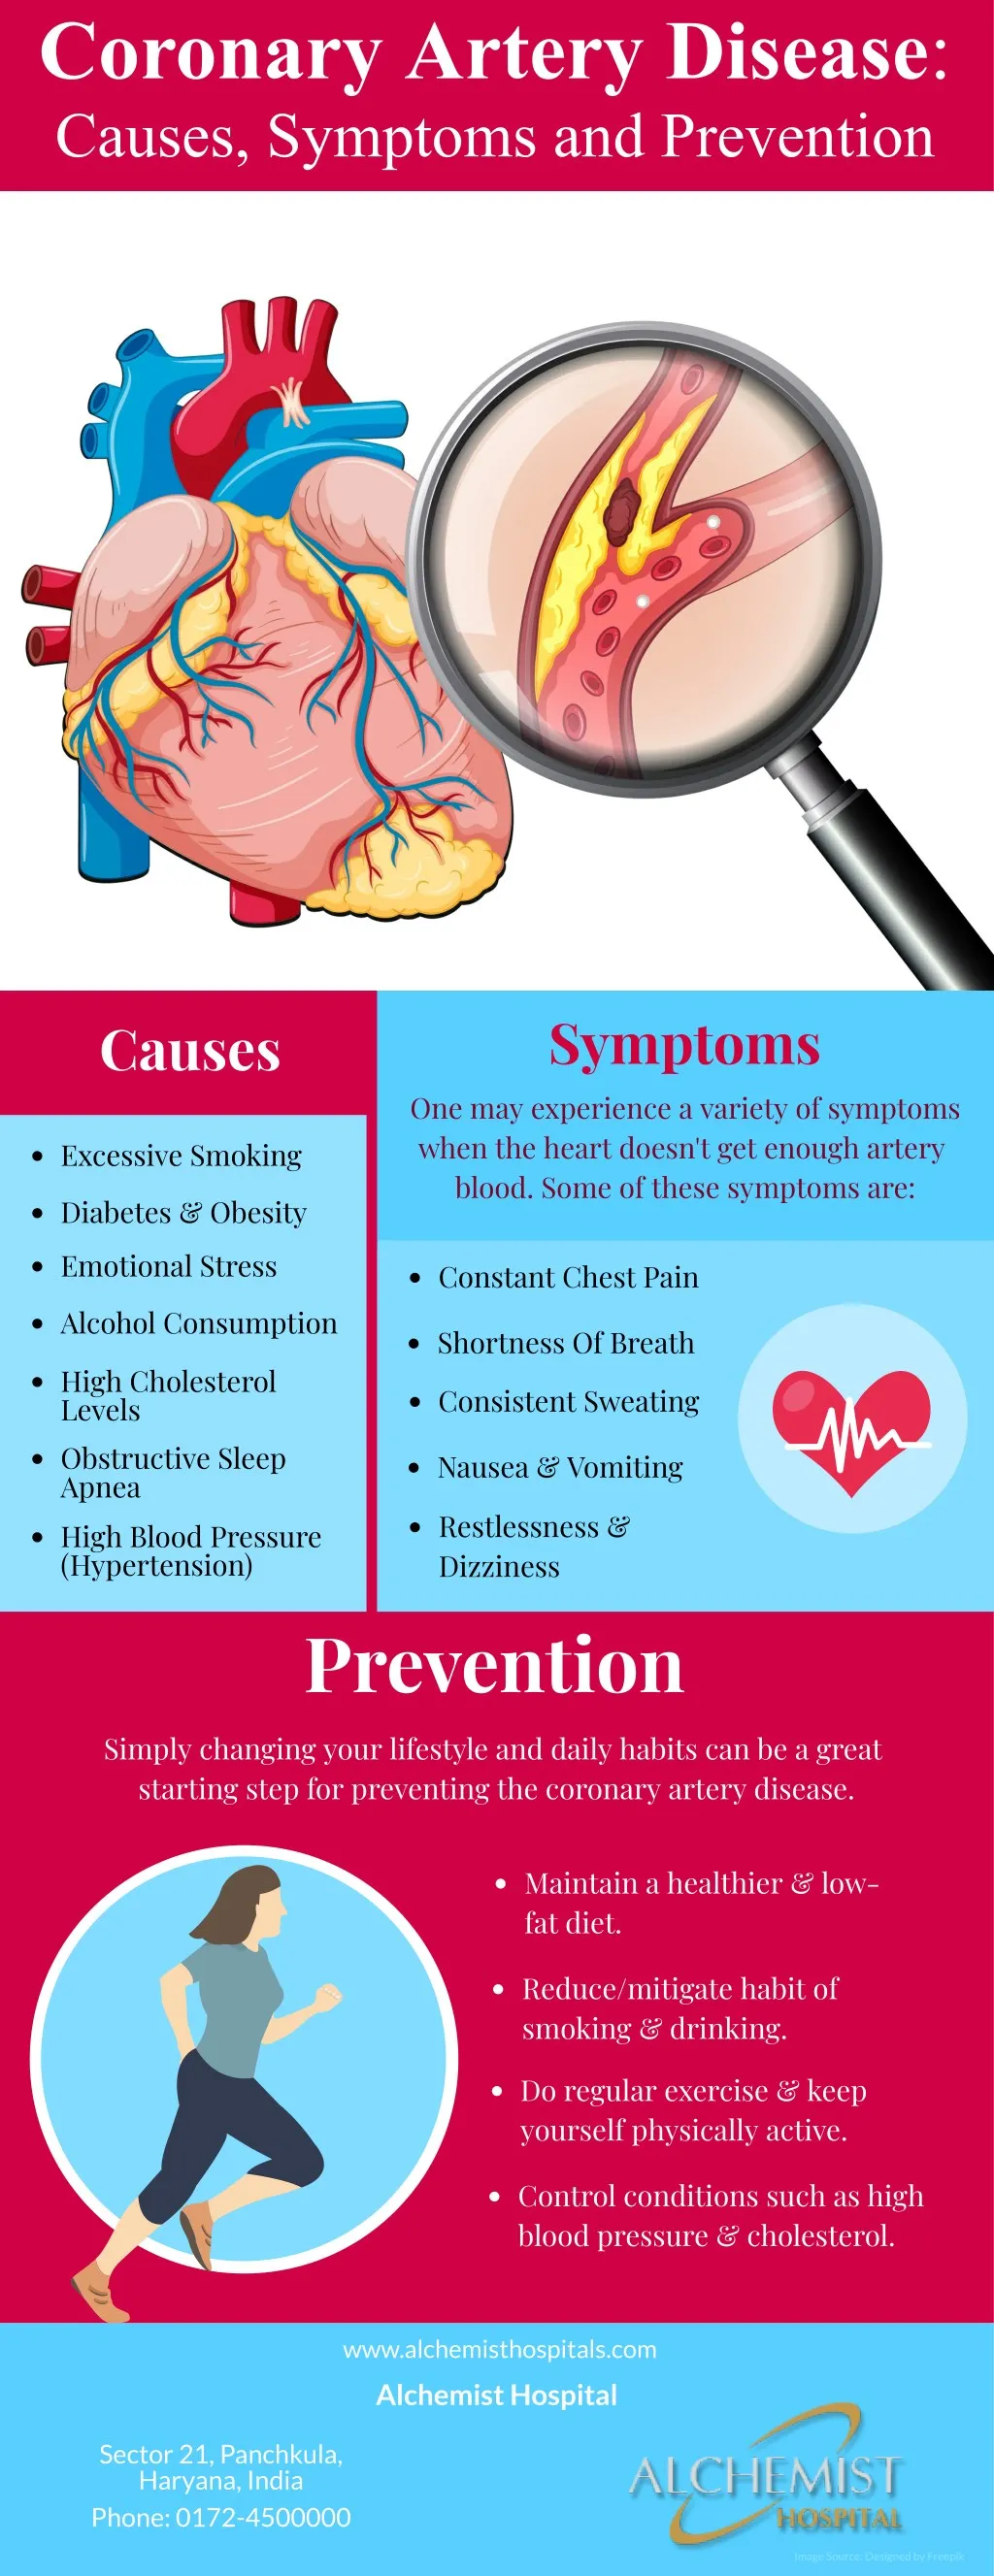 coronary artery disease causes symptoms